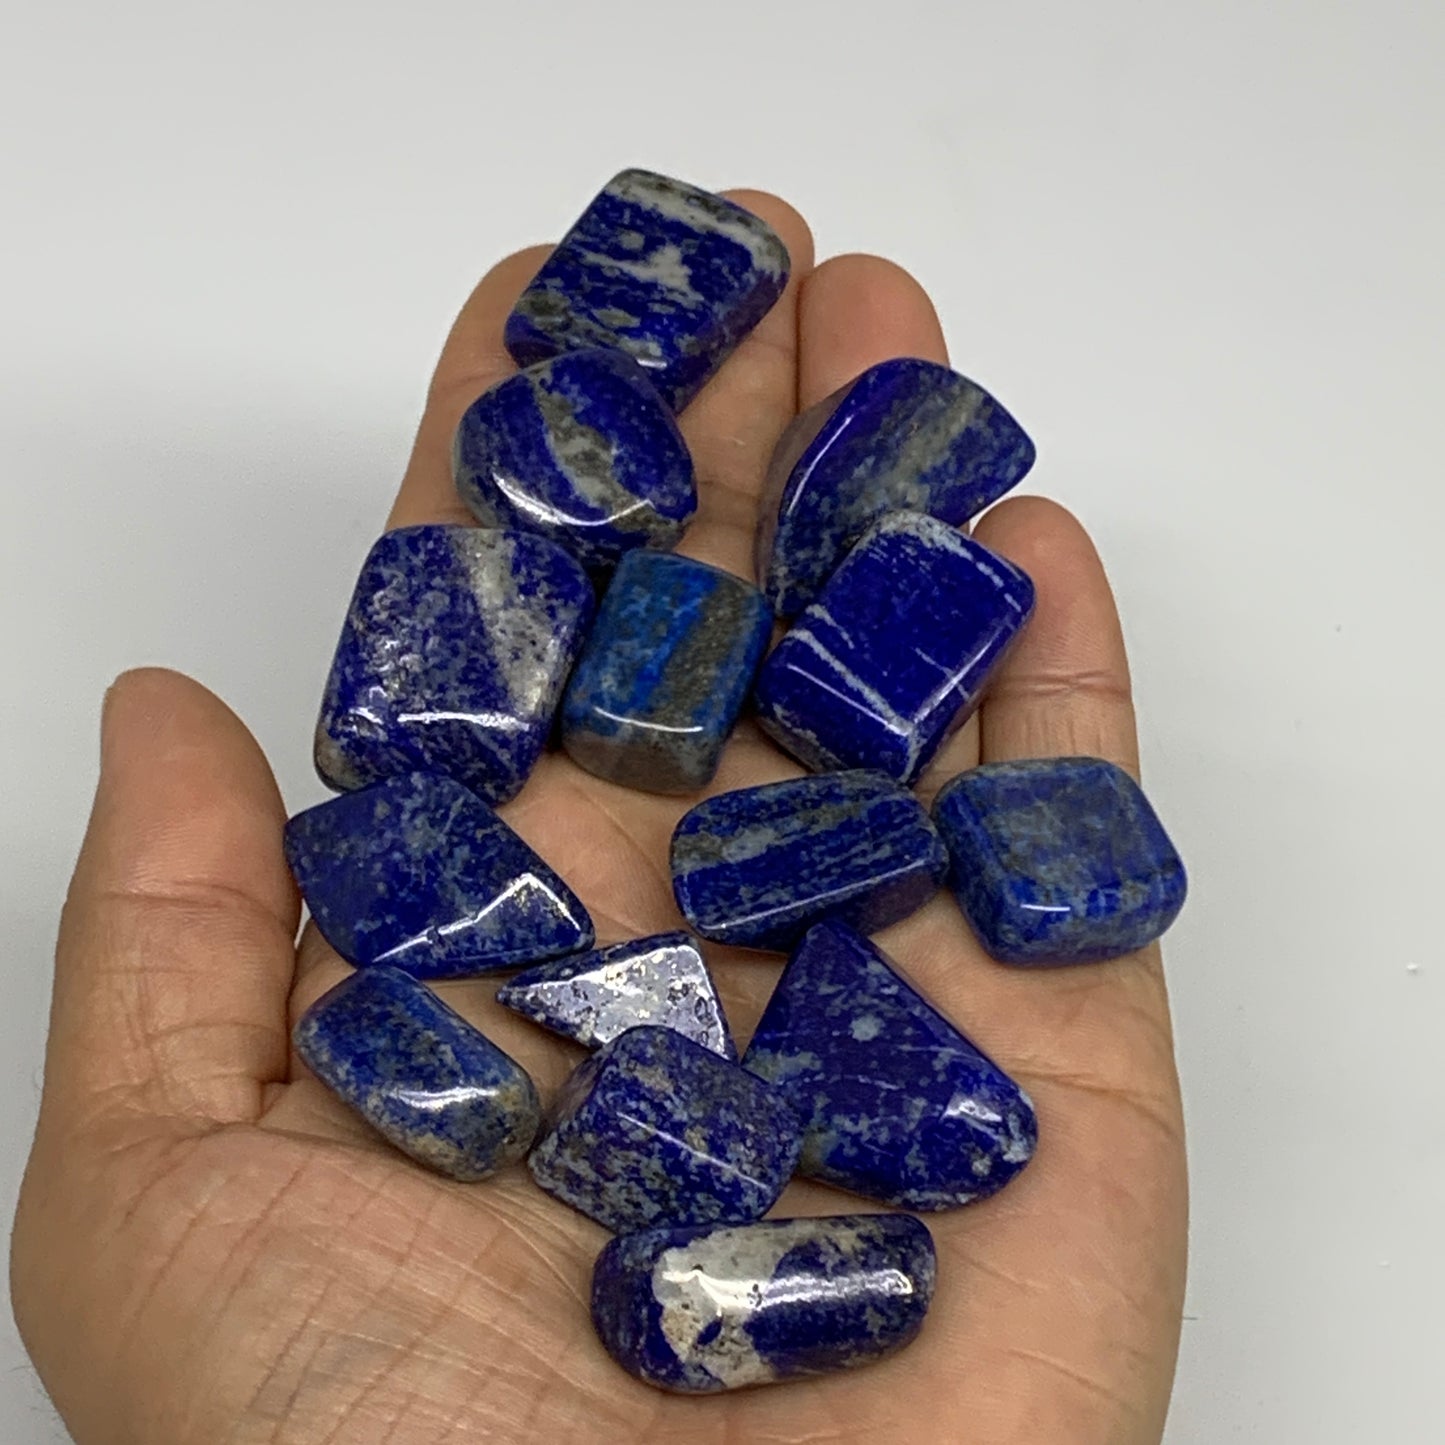 130.8g,0.7"-1.2", 14pcs, Natural Lapis Lazuli Tumbled Stone @Afghanistan, B30286